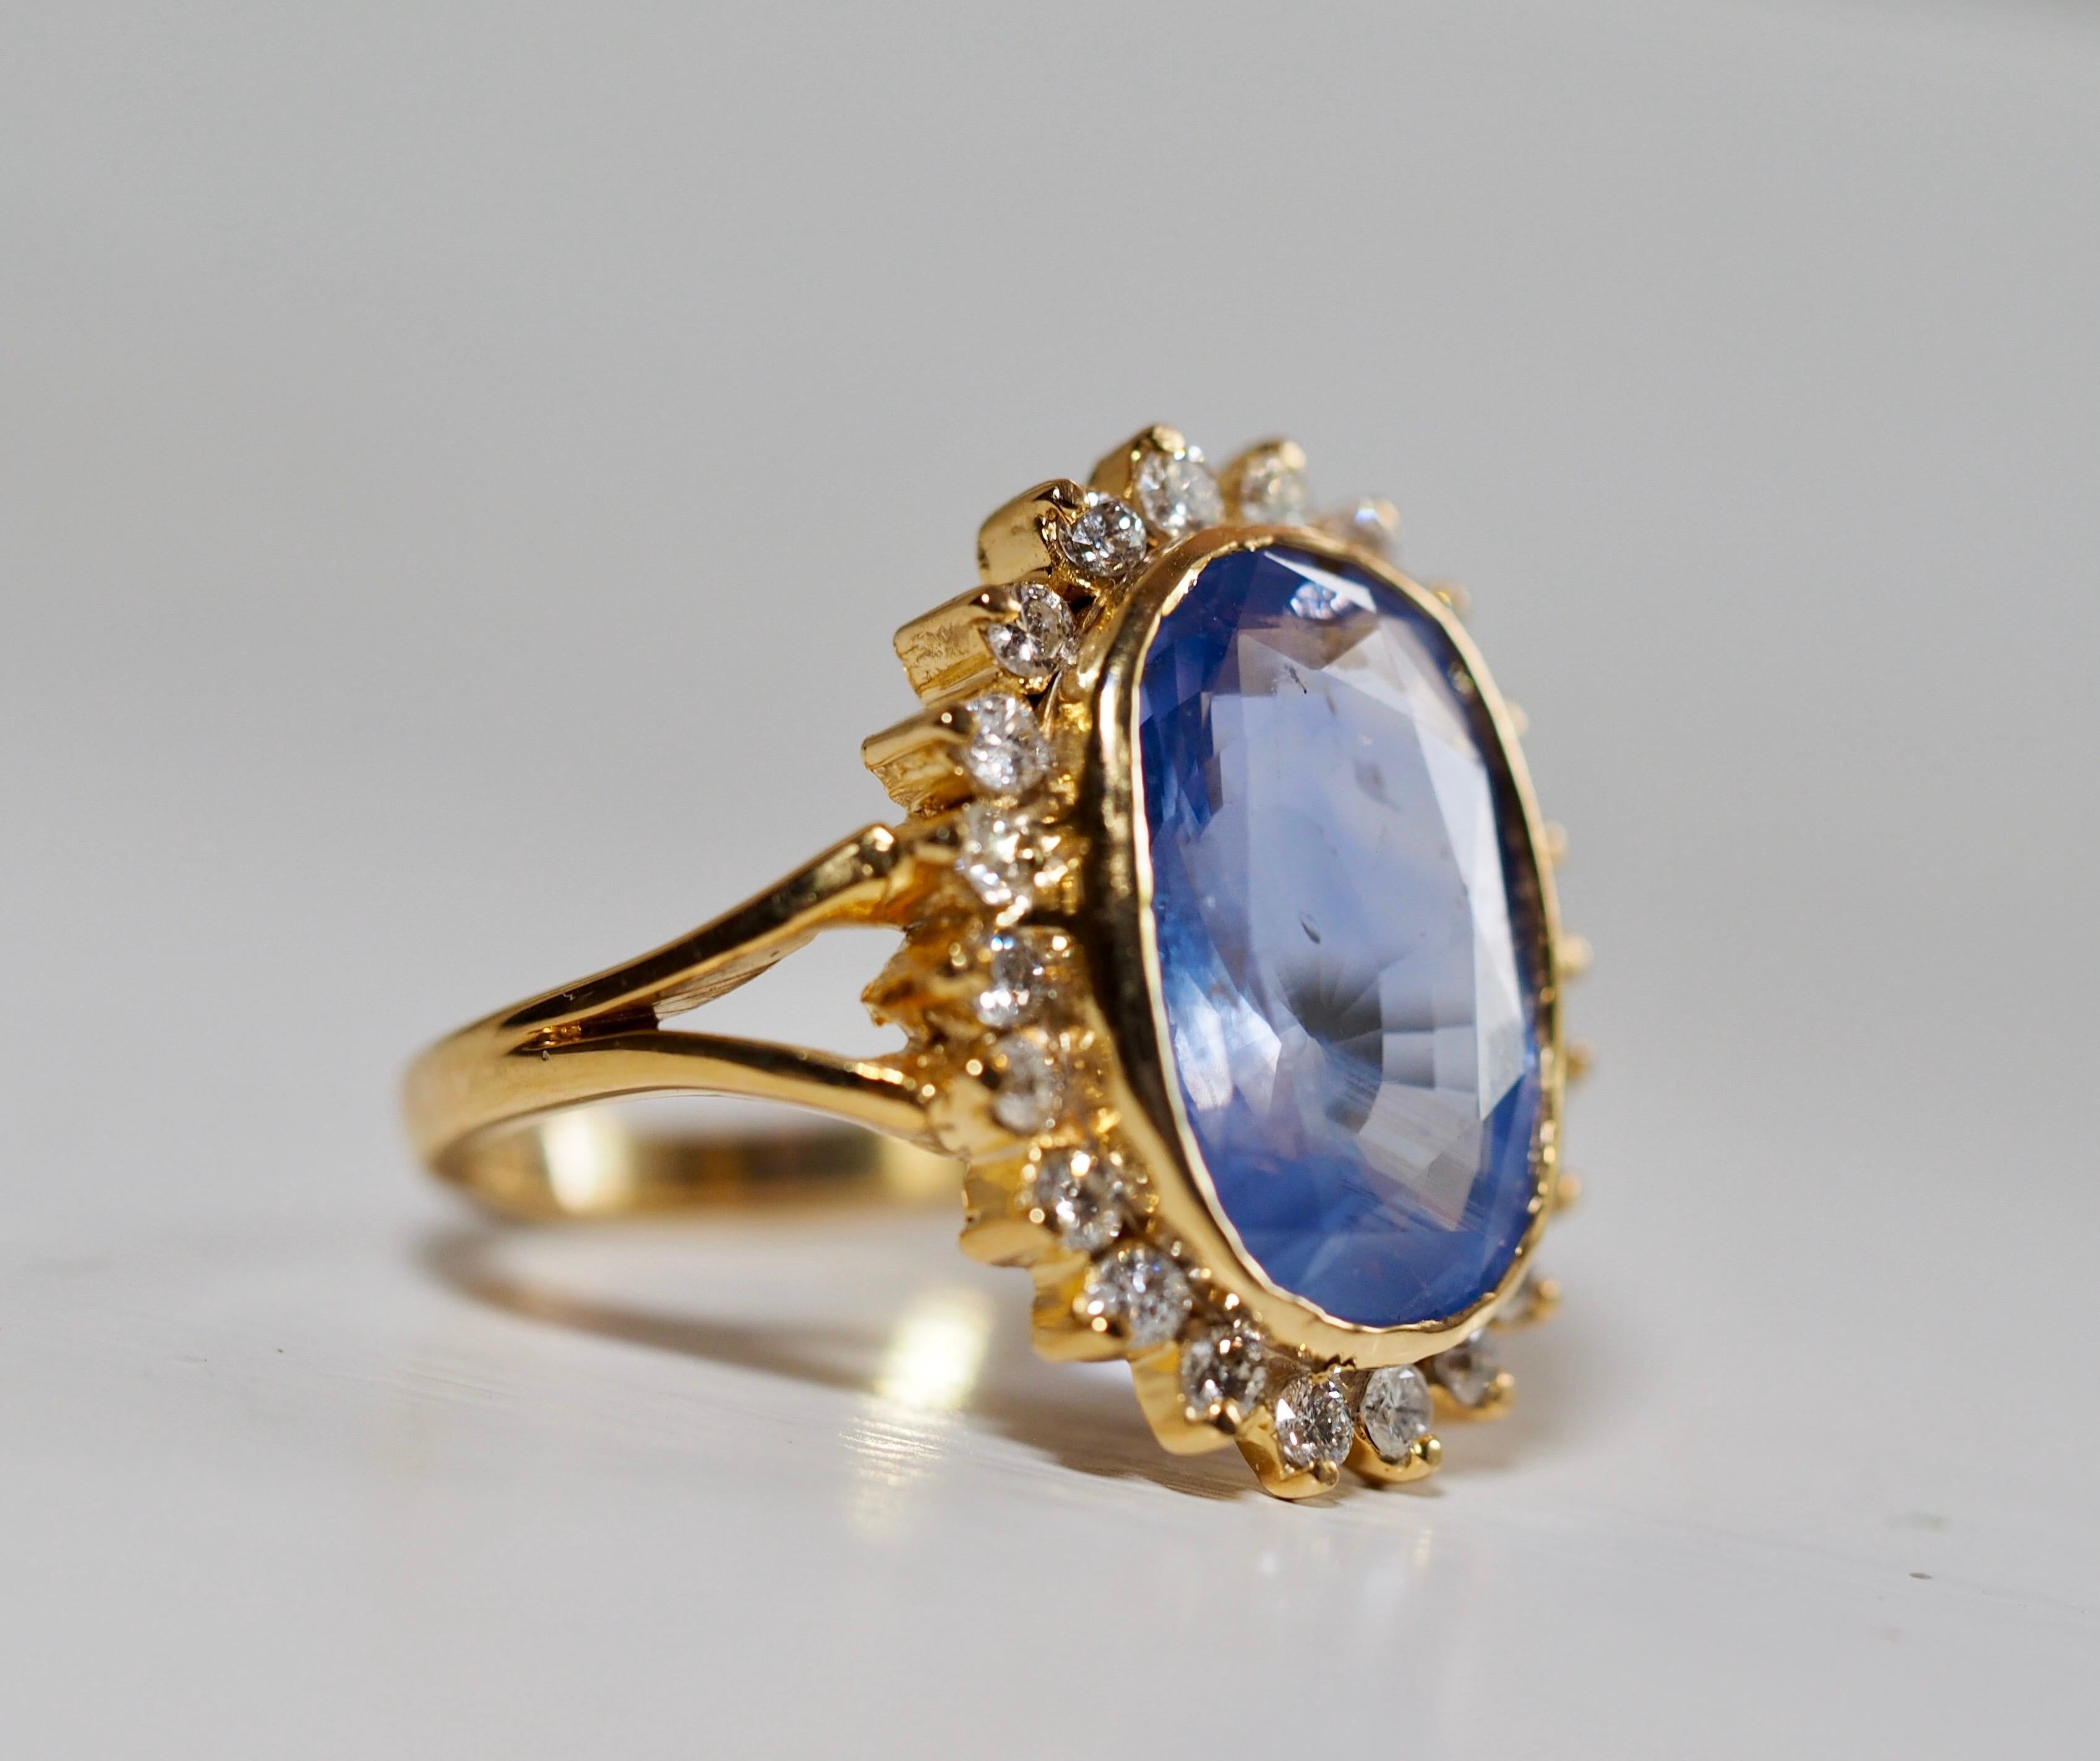 Oval Cut GIA Certified Vintage Ceylon Sapphire Diamond Halo Ring in 14 Karat Yellow Gold